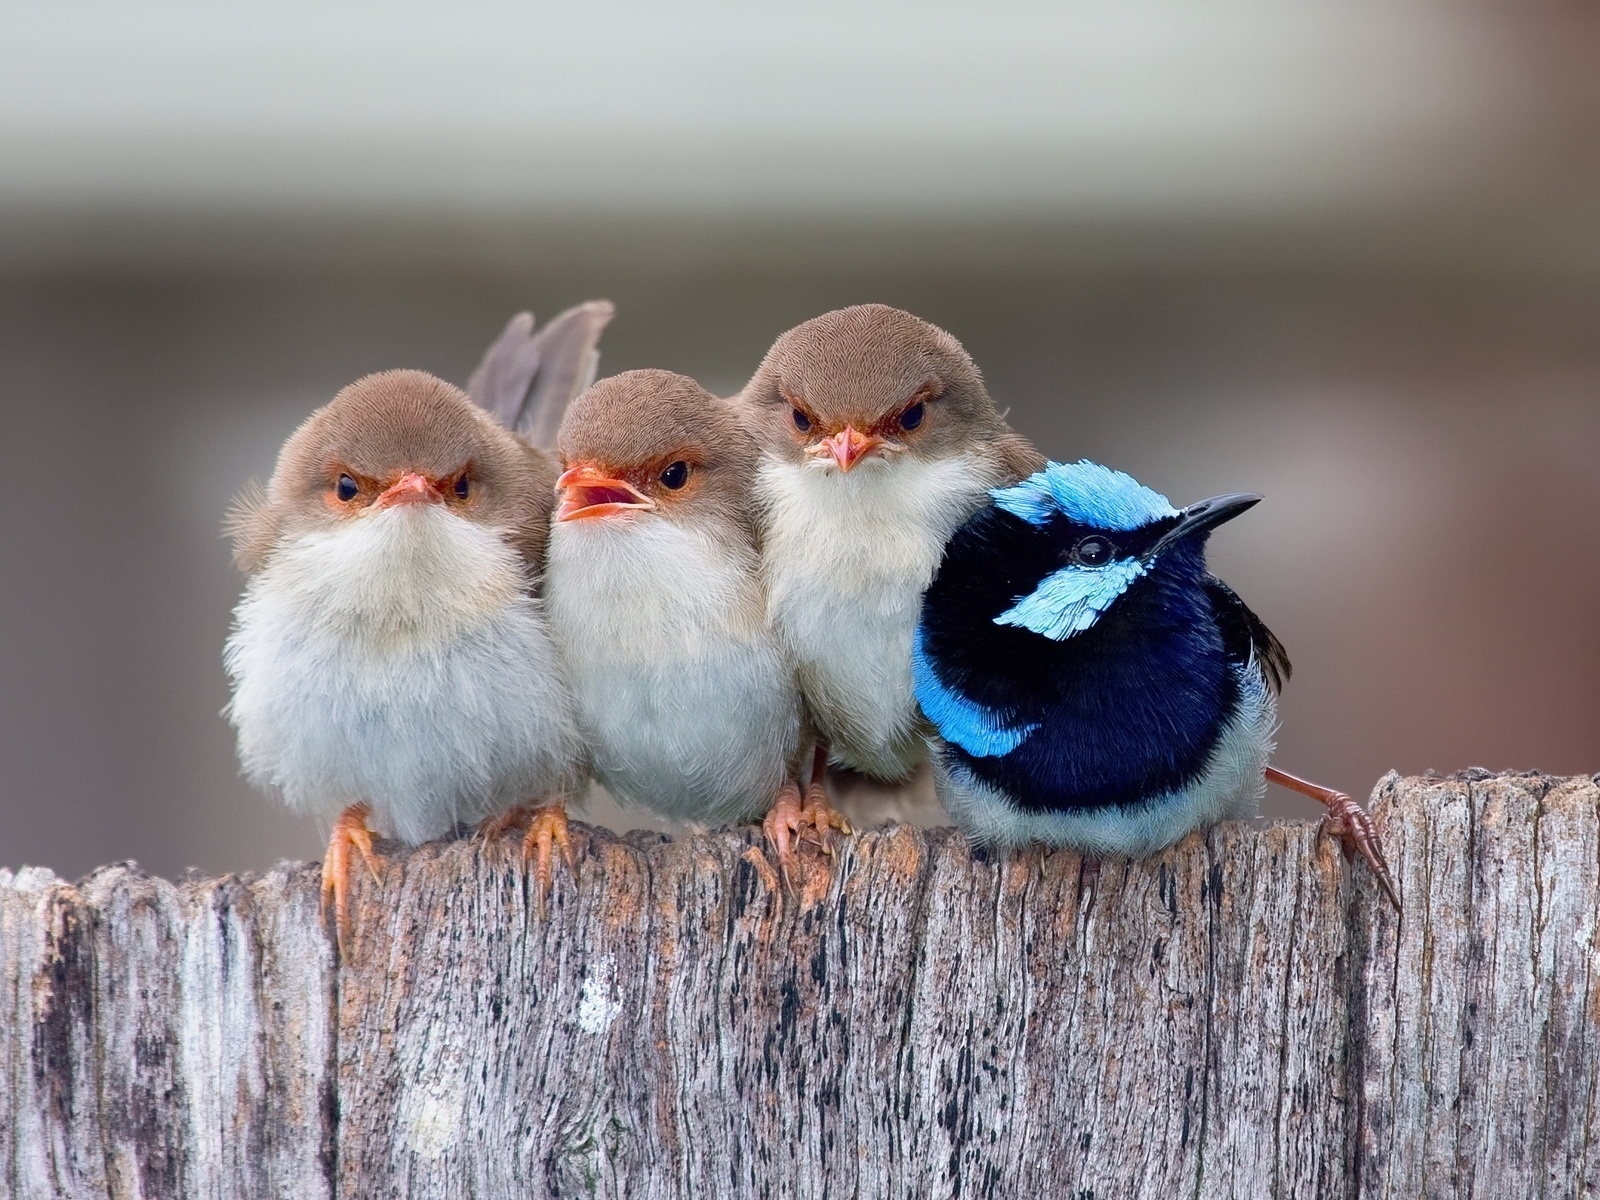 Cute Little Birds for 1600 x 1200 resolution